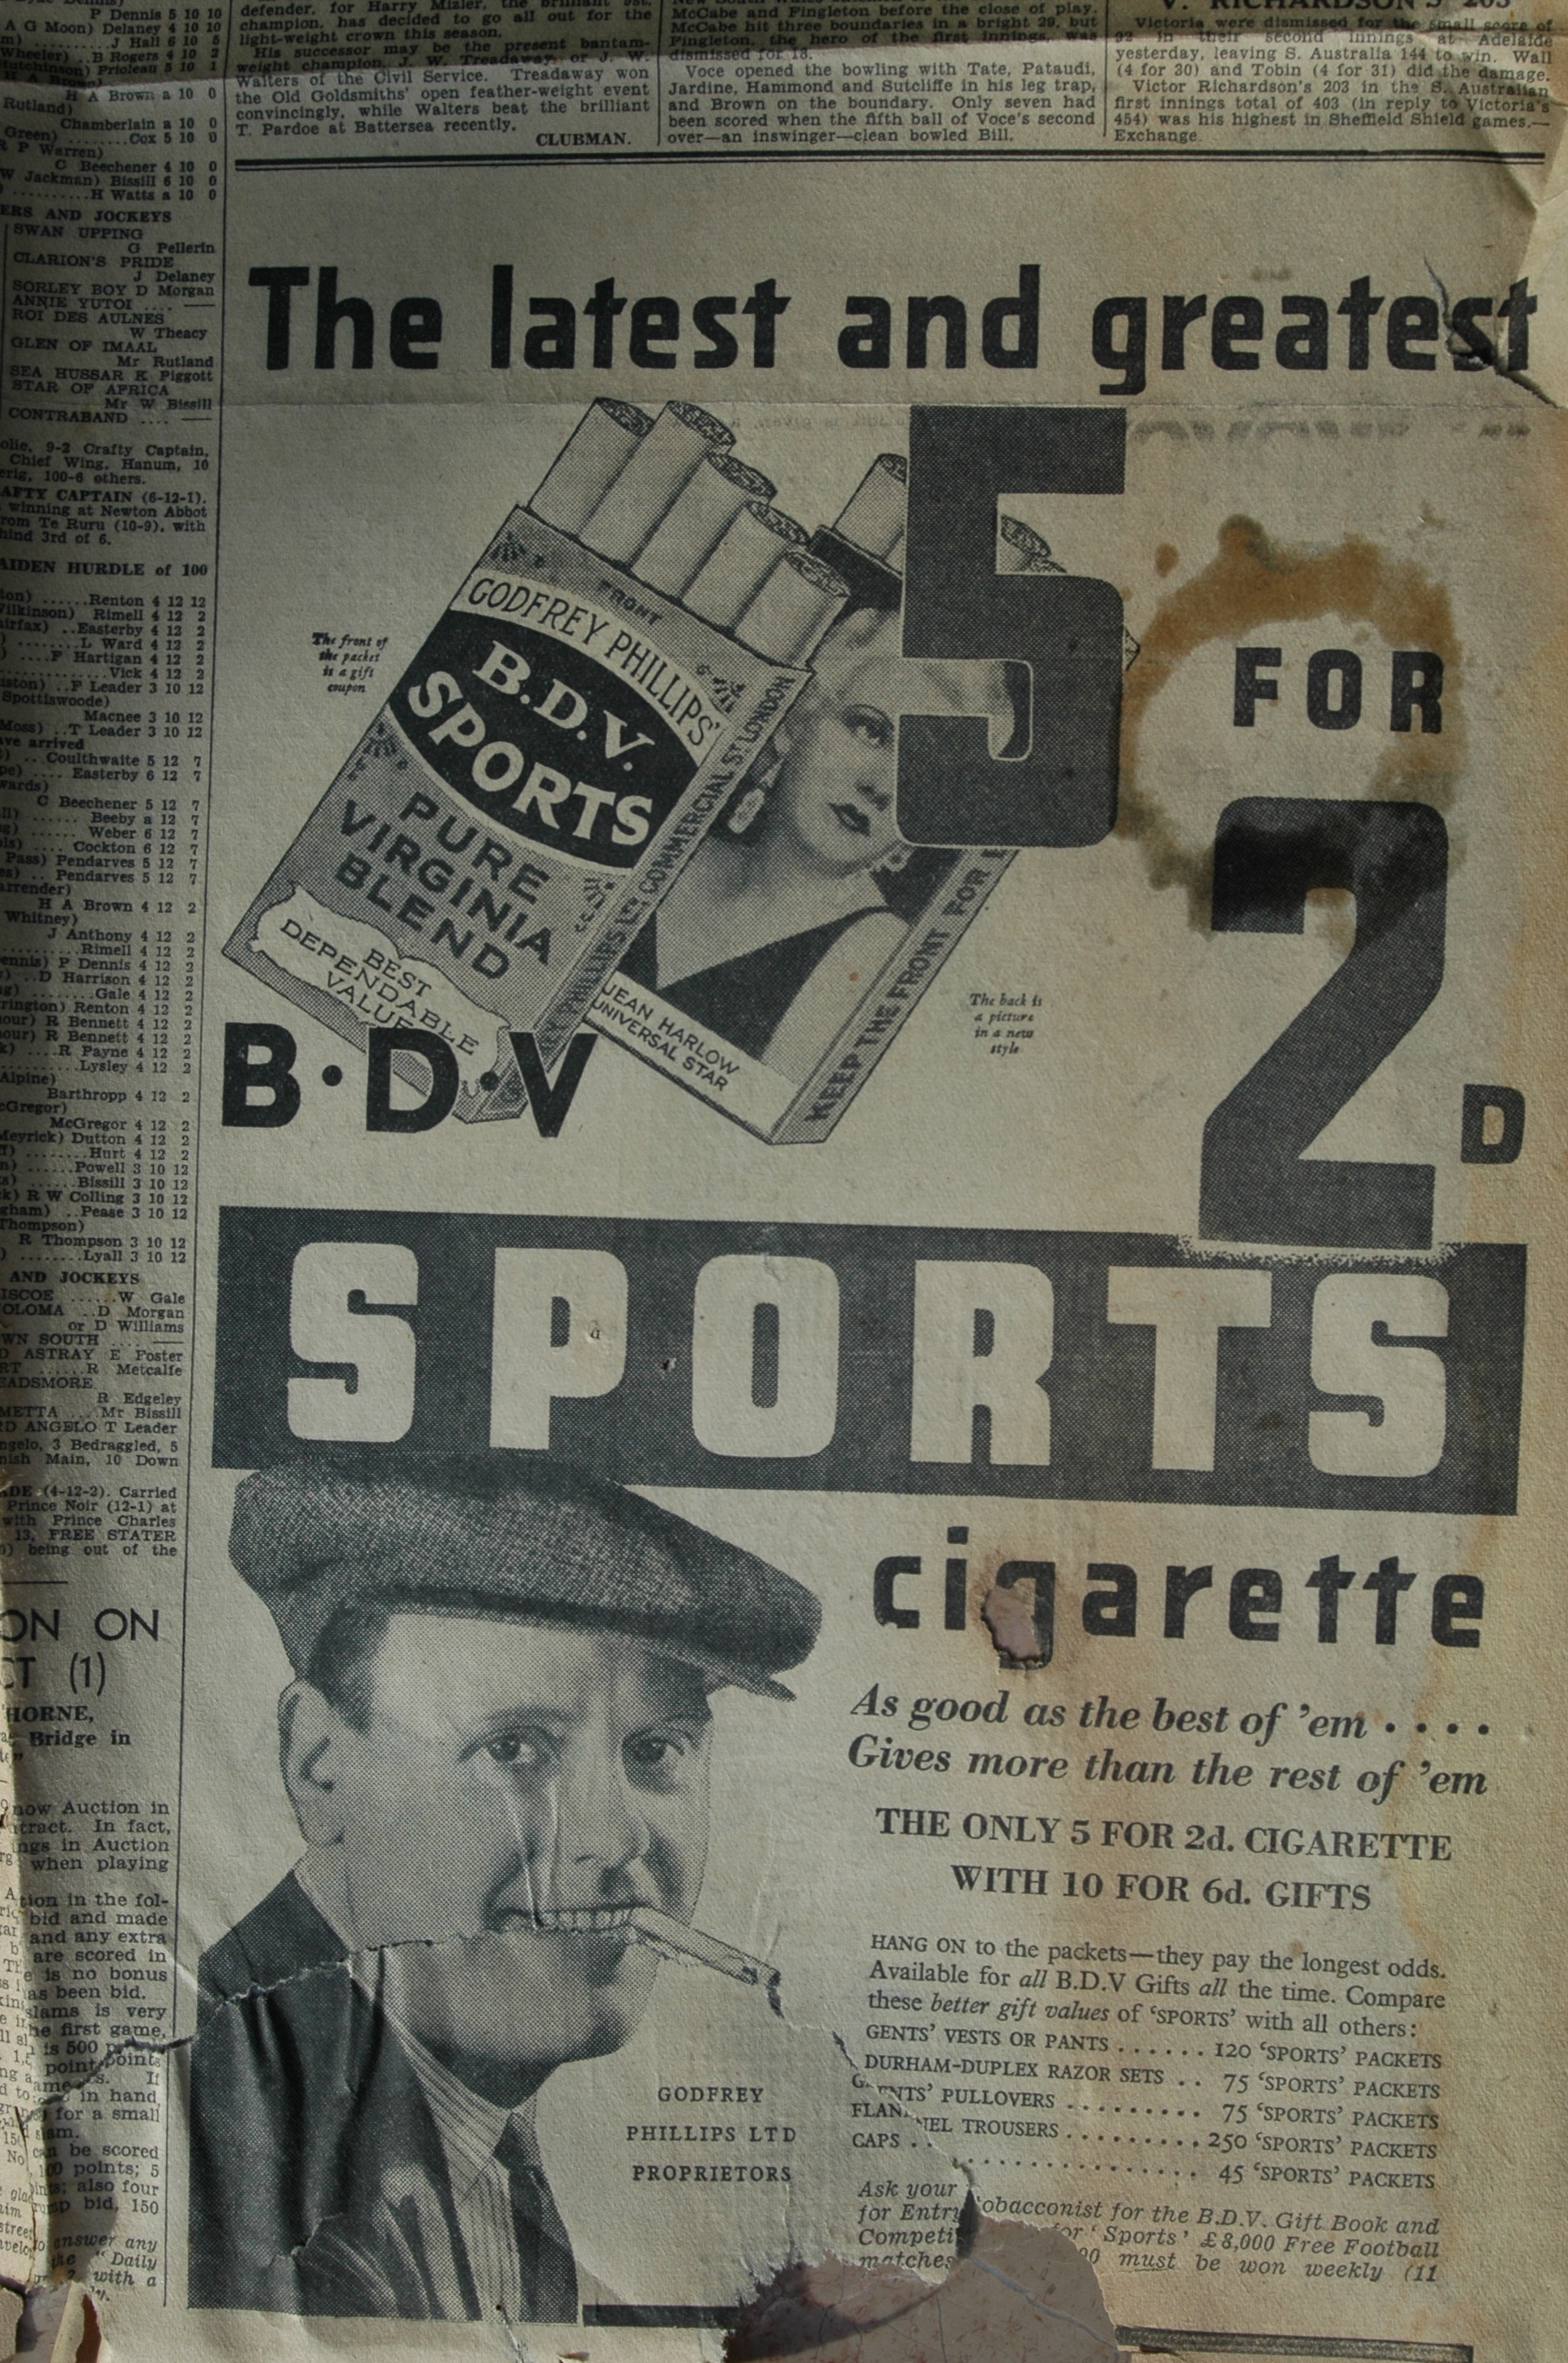 1932 cigarette advertisement